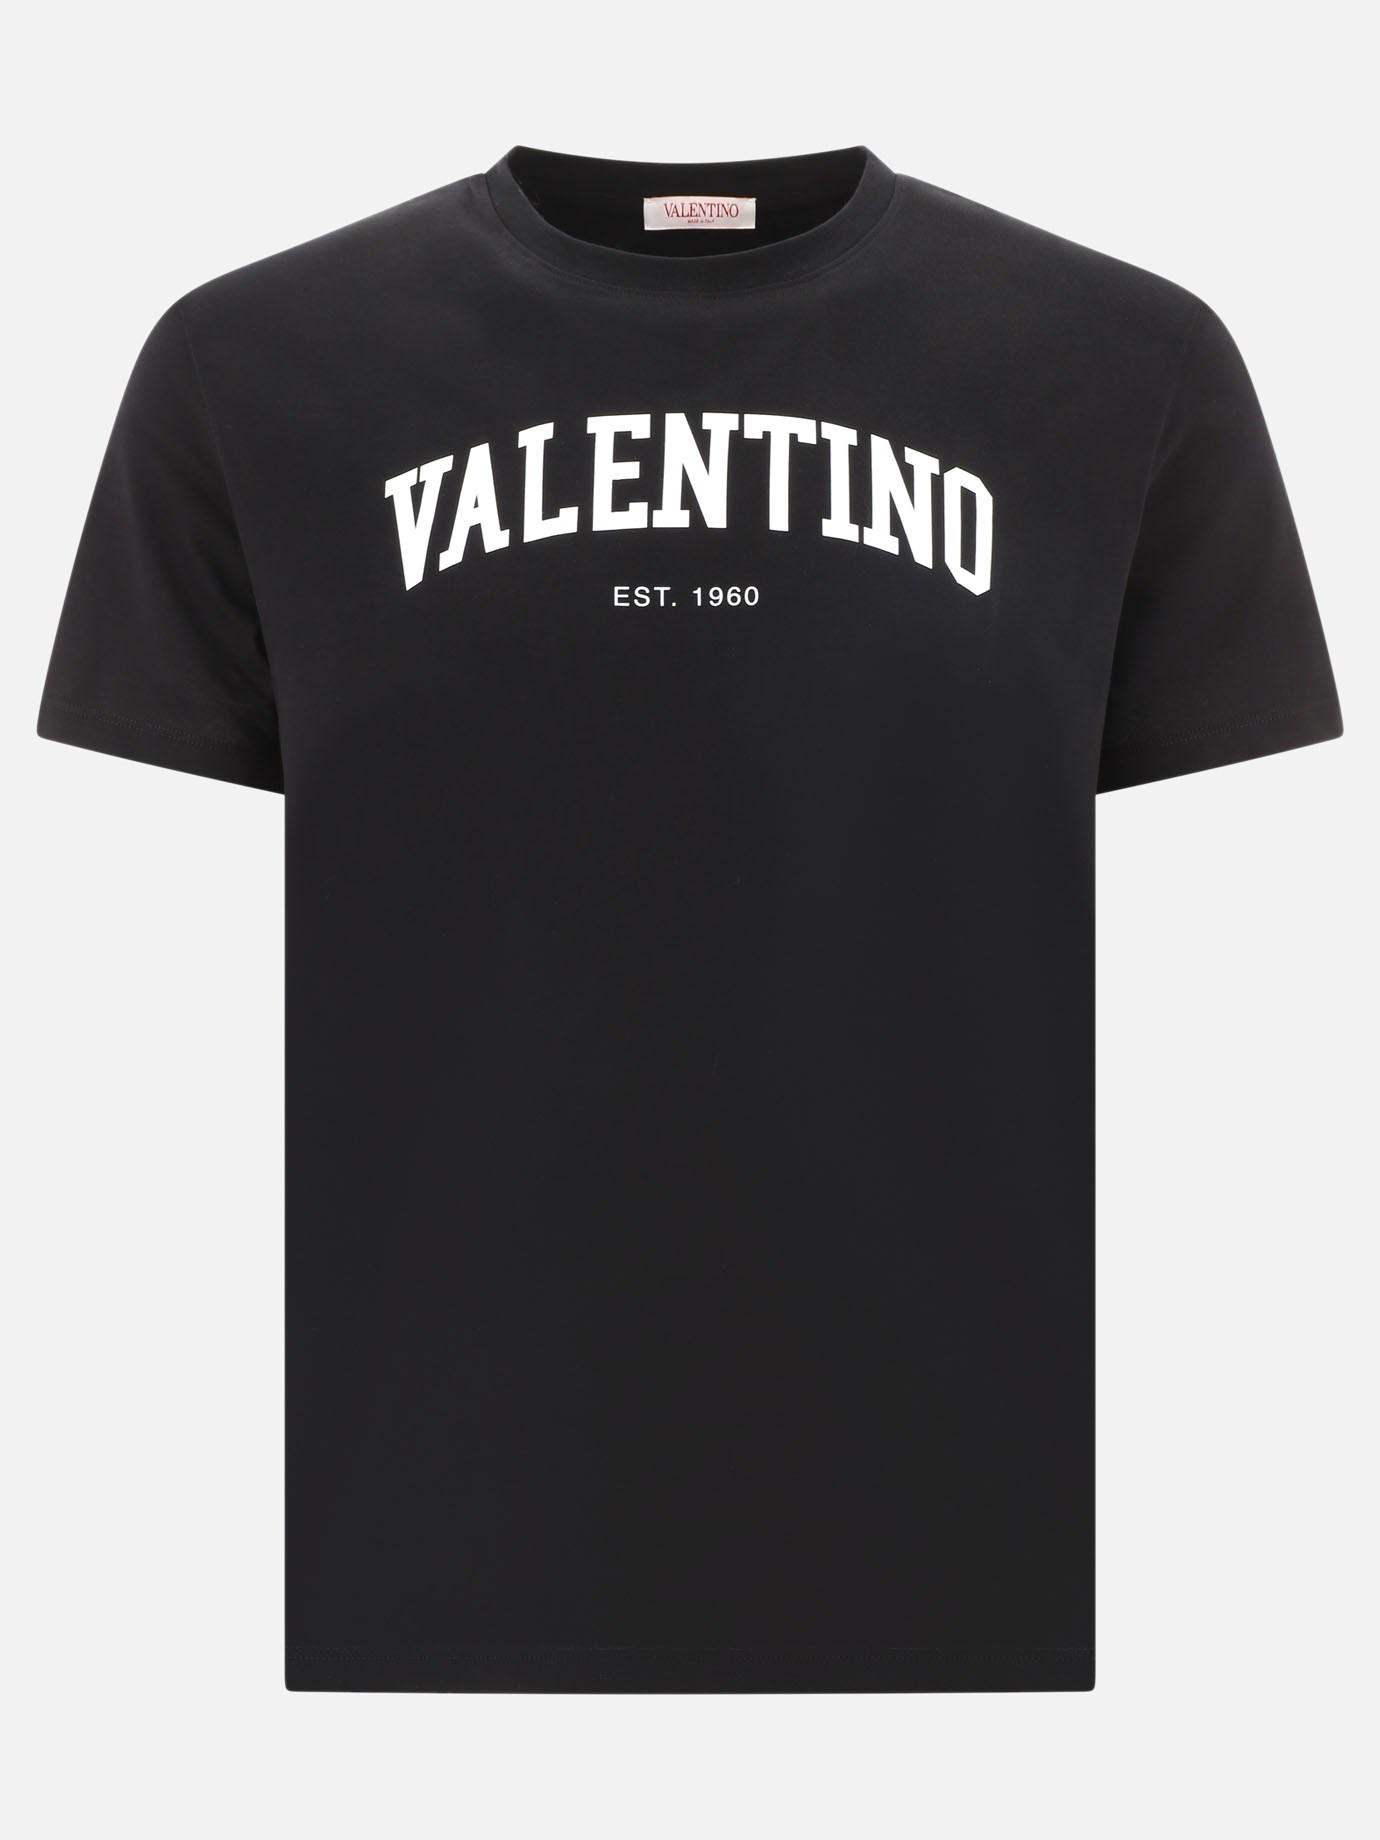 T-shirt  Valentino Est. 1960  by Valentino